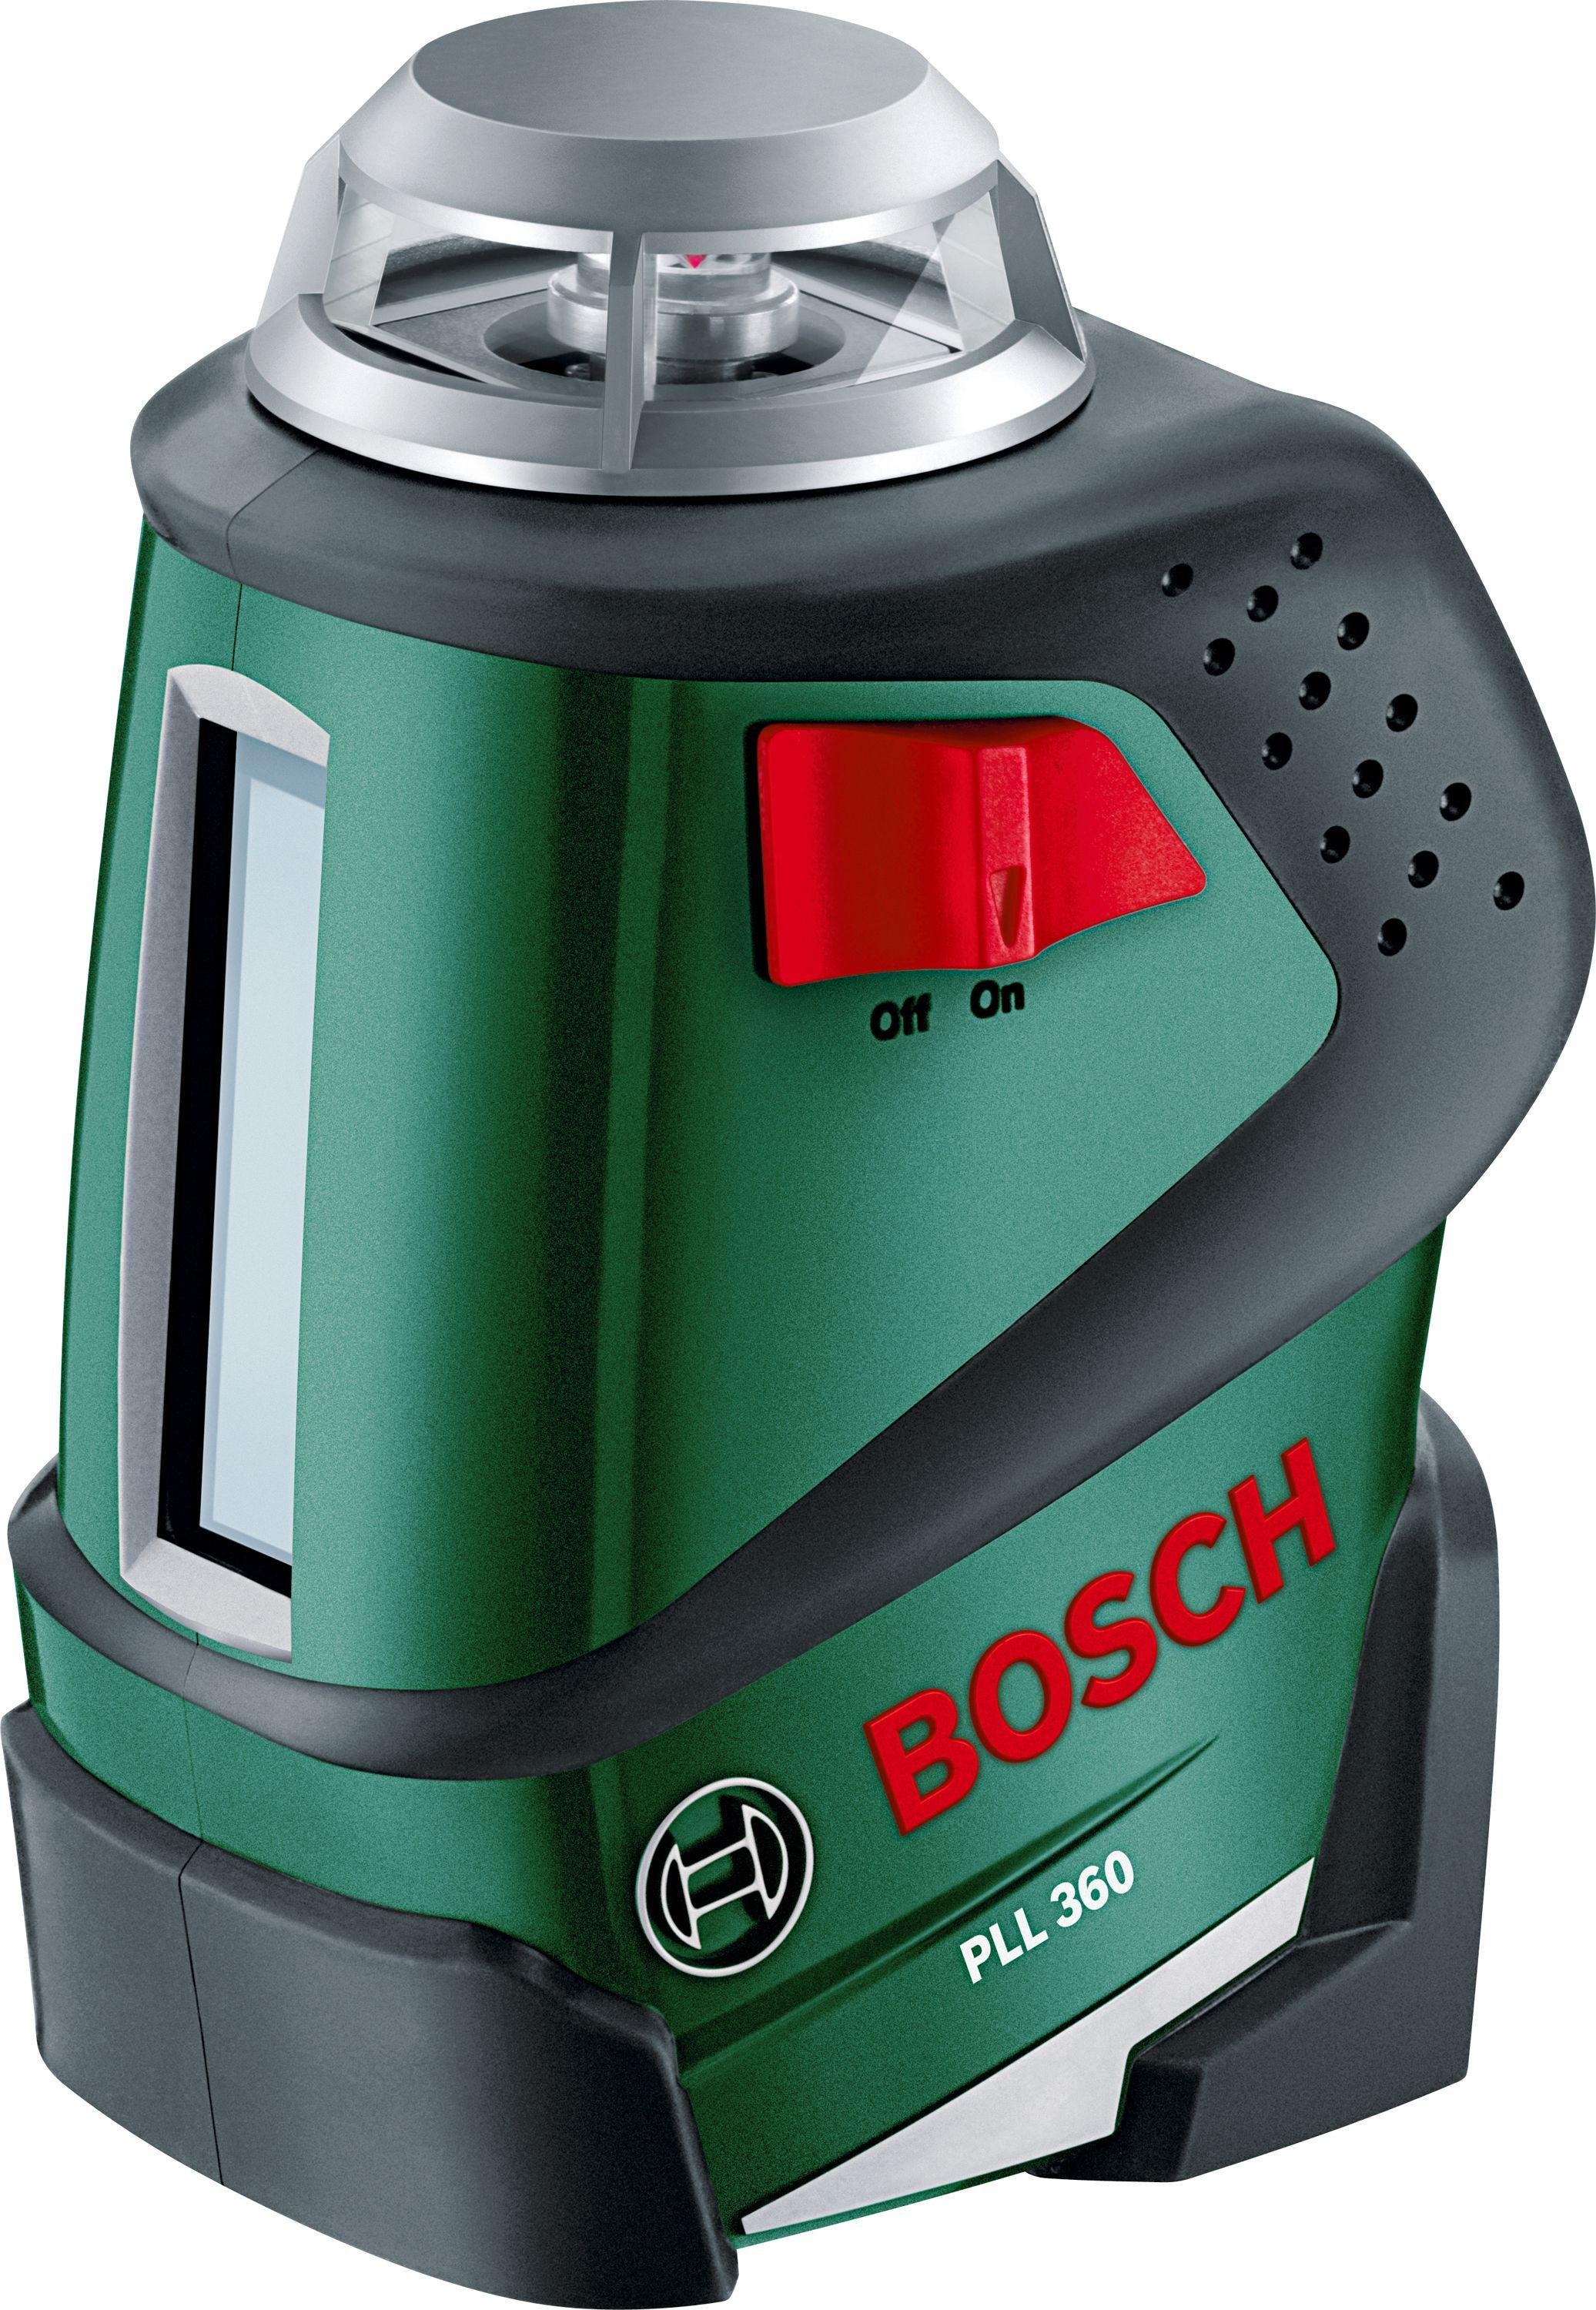 Bosch PLL 360 Set Levelling Laser 360 Degrees + Tripod Reviews